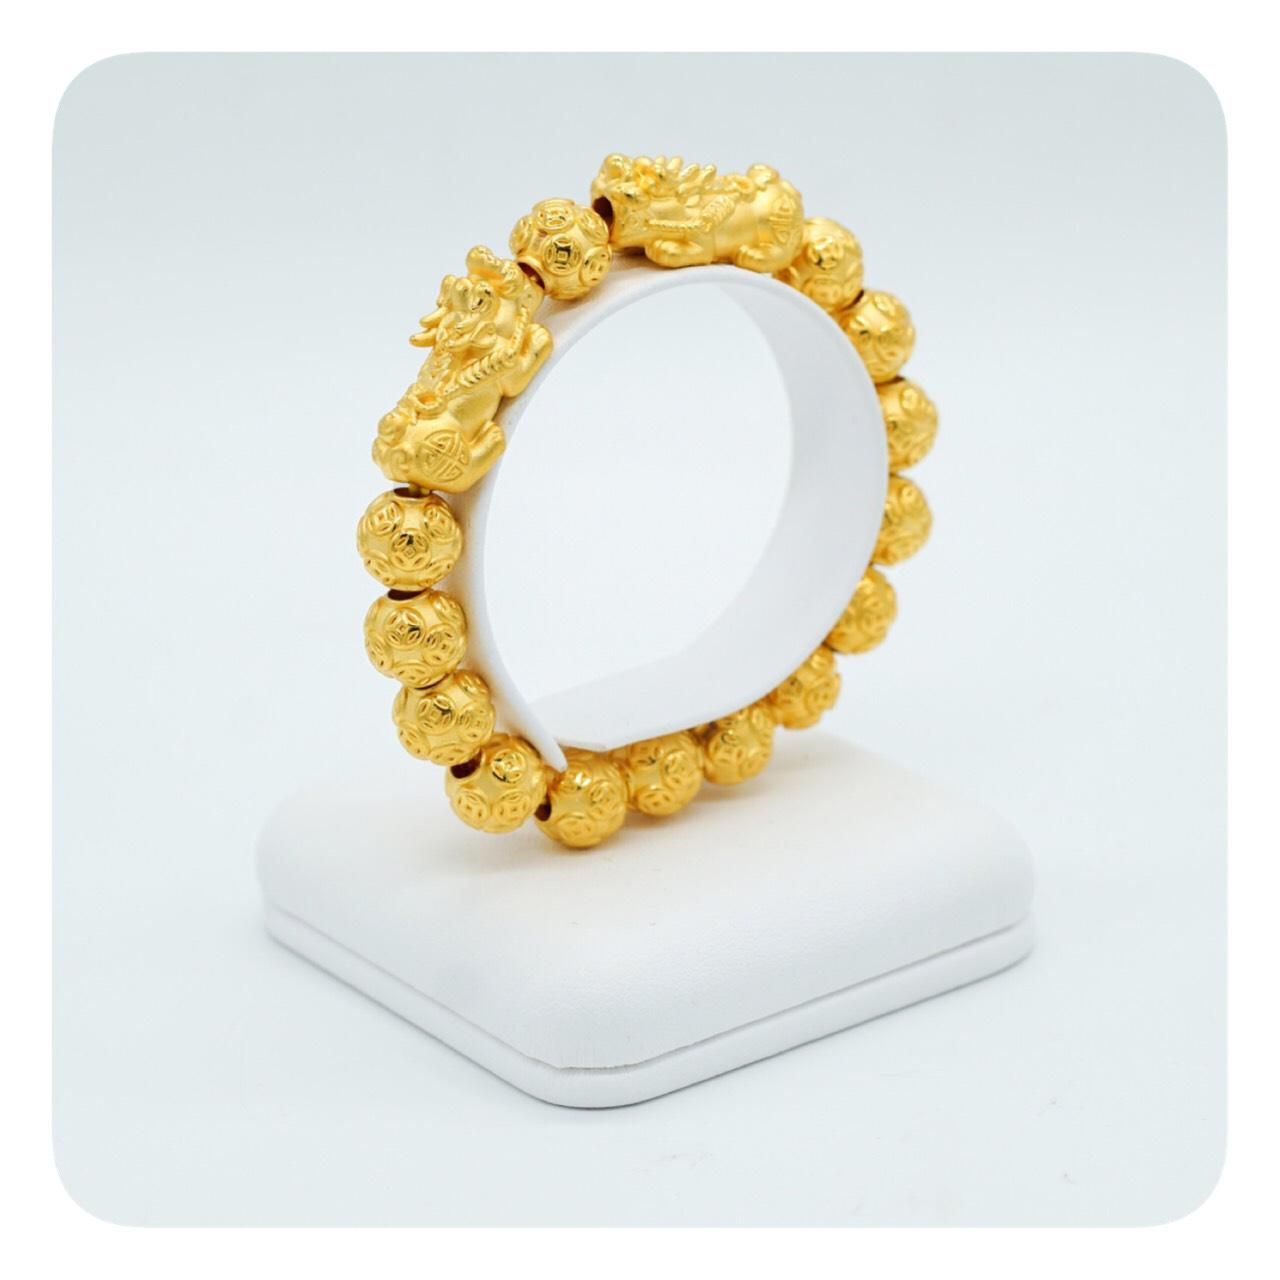 The frame ปี่เซี๊ยะเรียกทรัพย์ทองทั้งเส้นและเม็ดทองเป็นทอง99.99%